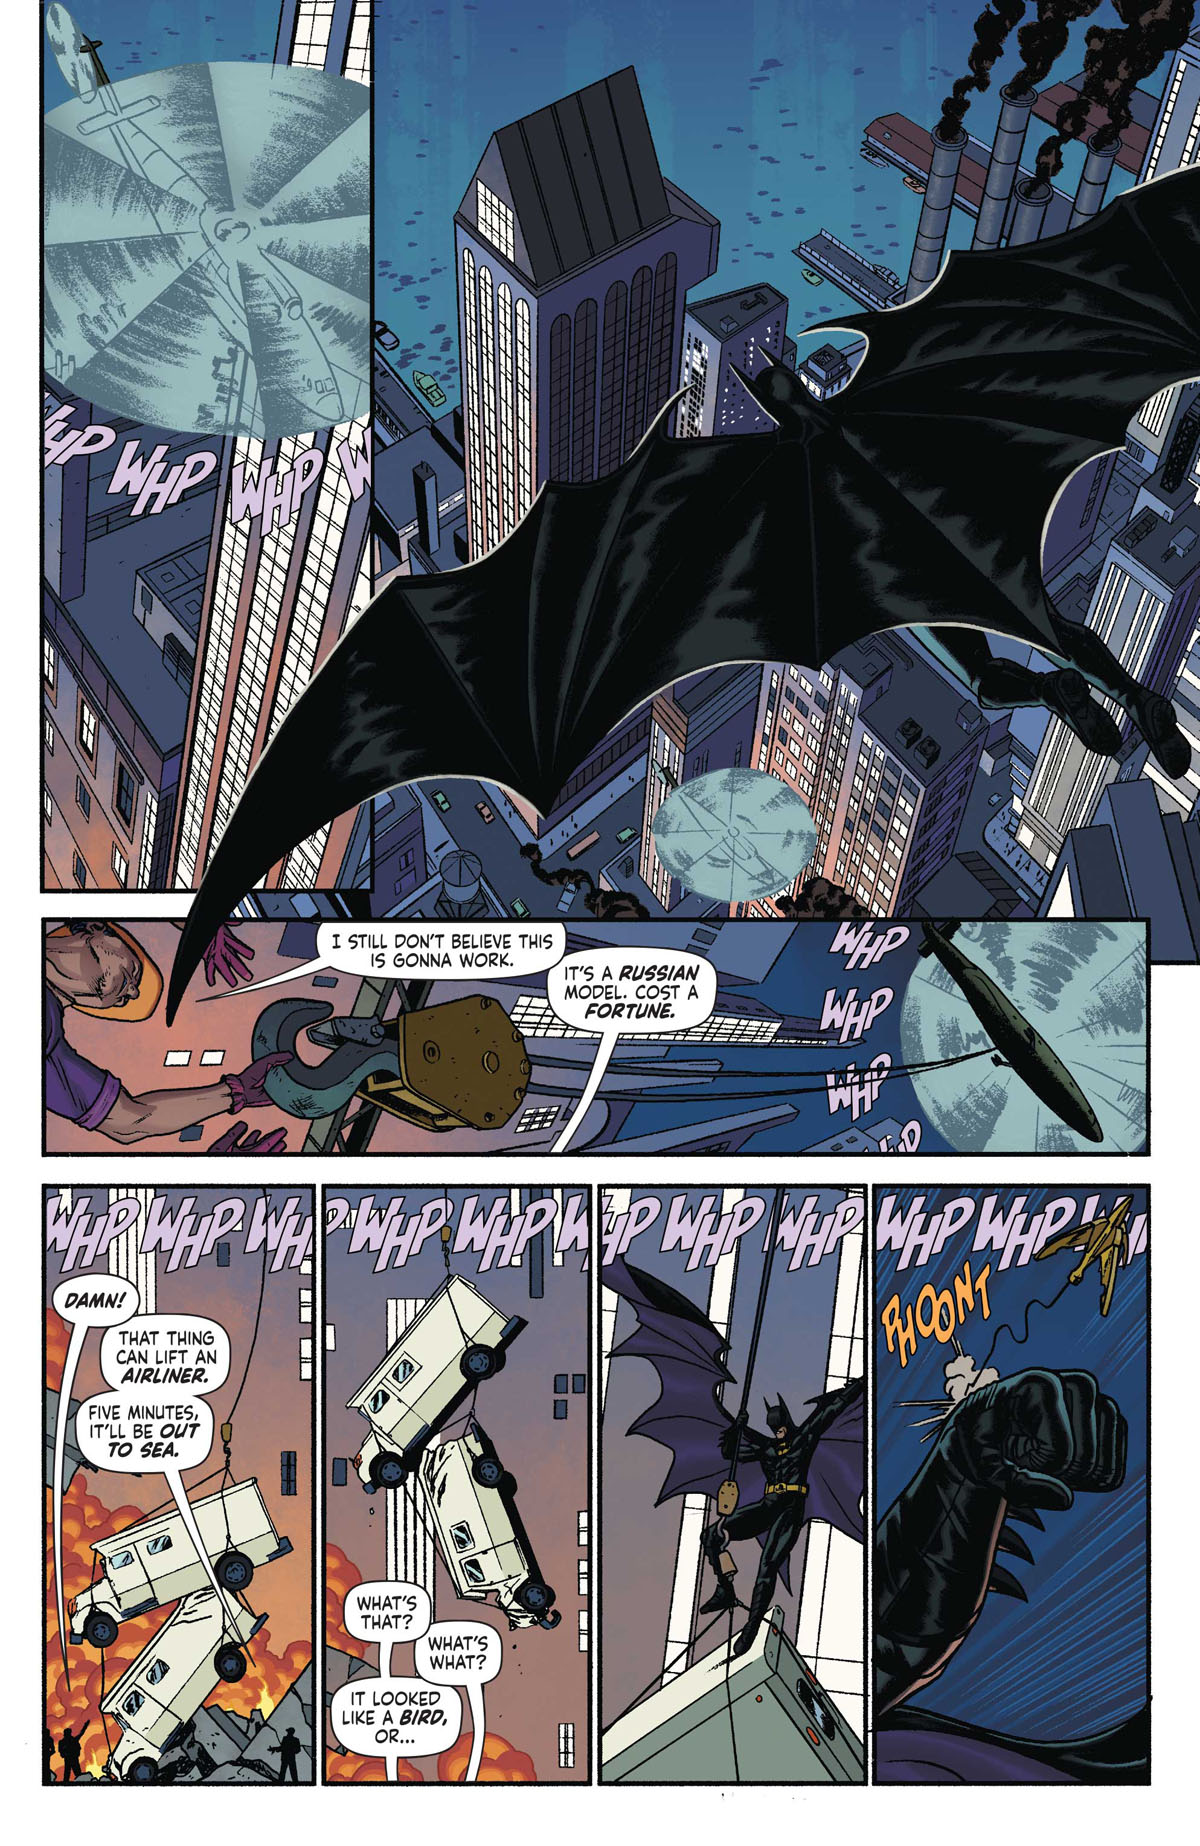 Batman '89 #1 Extended Preview #6